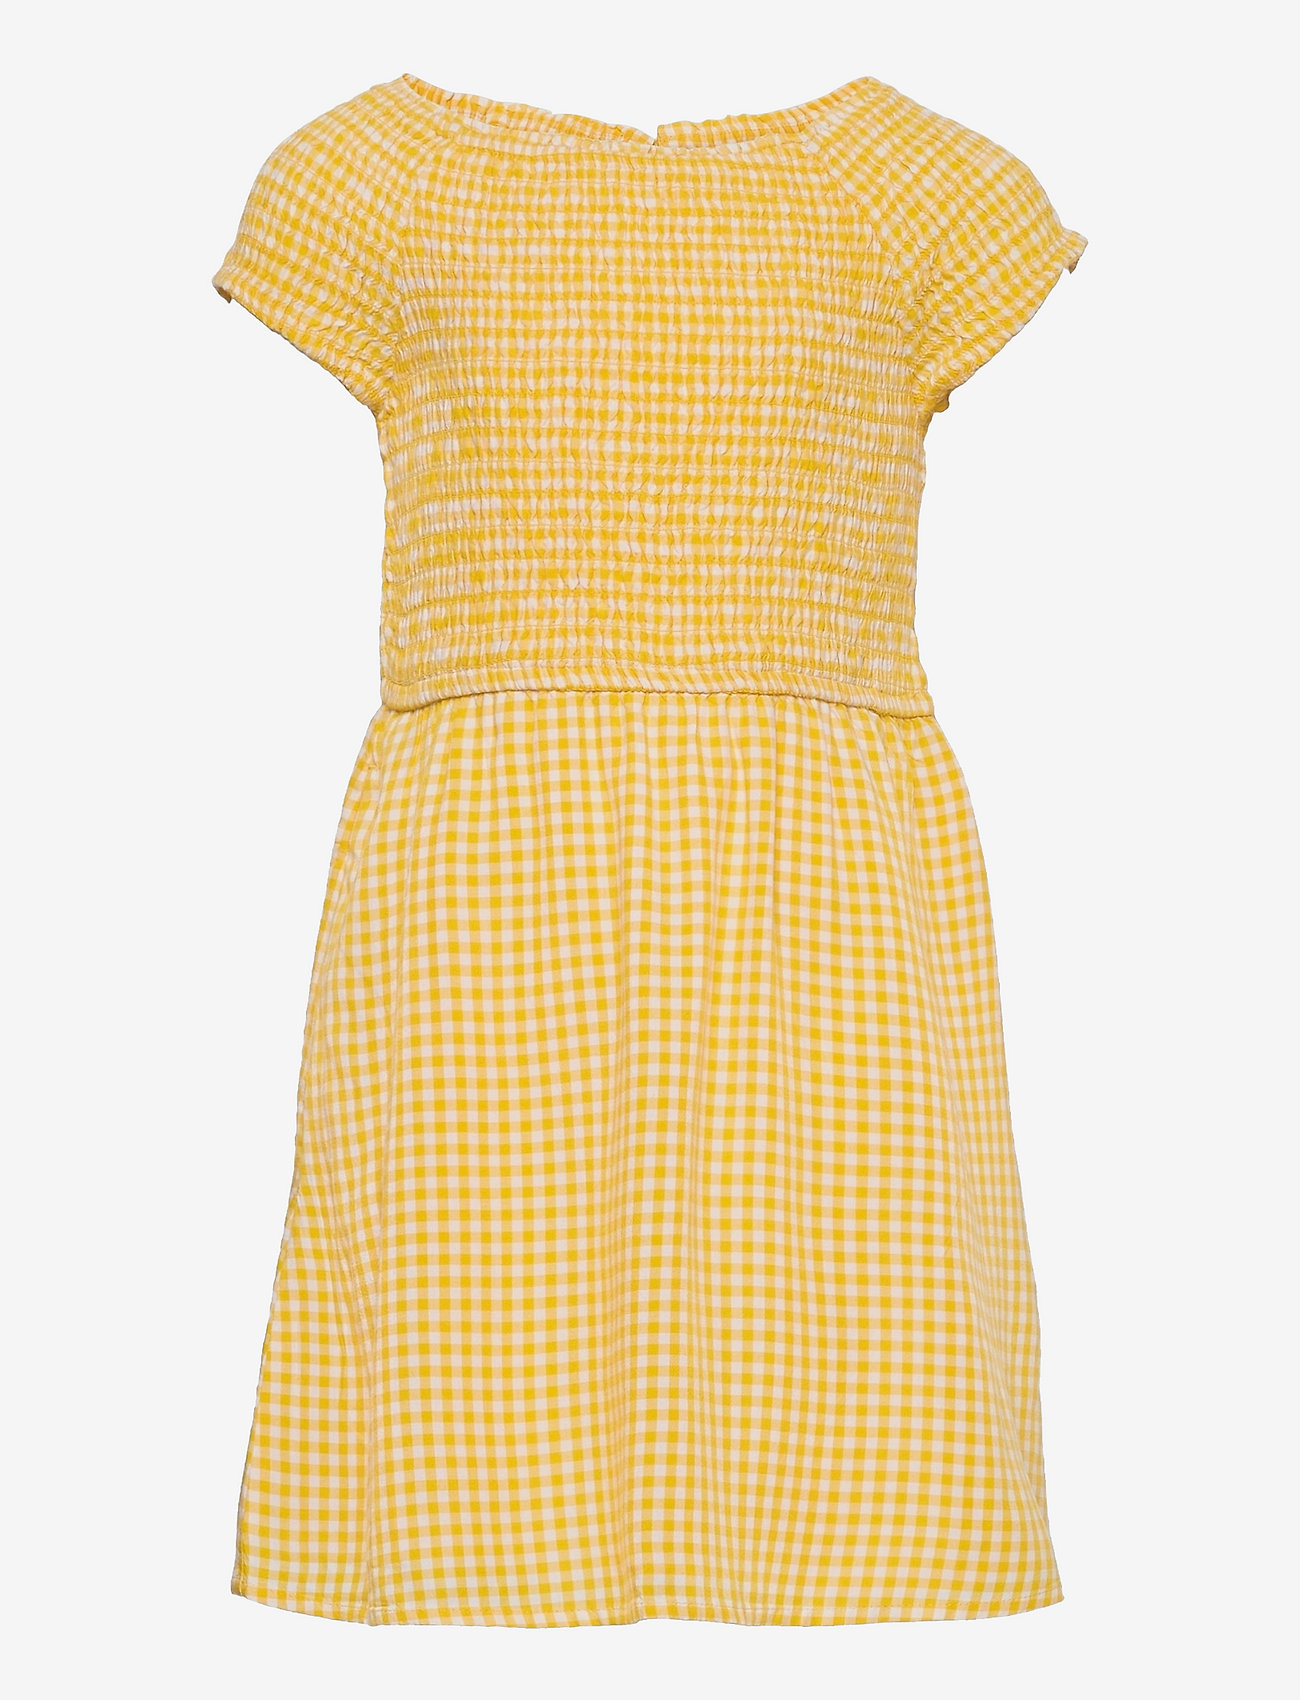 Abercrombie & Fitch - kids GIRLS DRESSES - lyhythihaiset - light yellow patt - 0